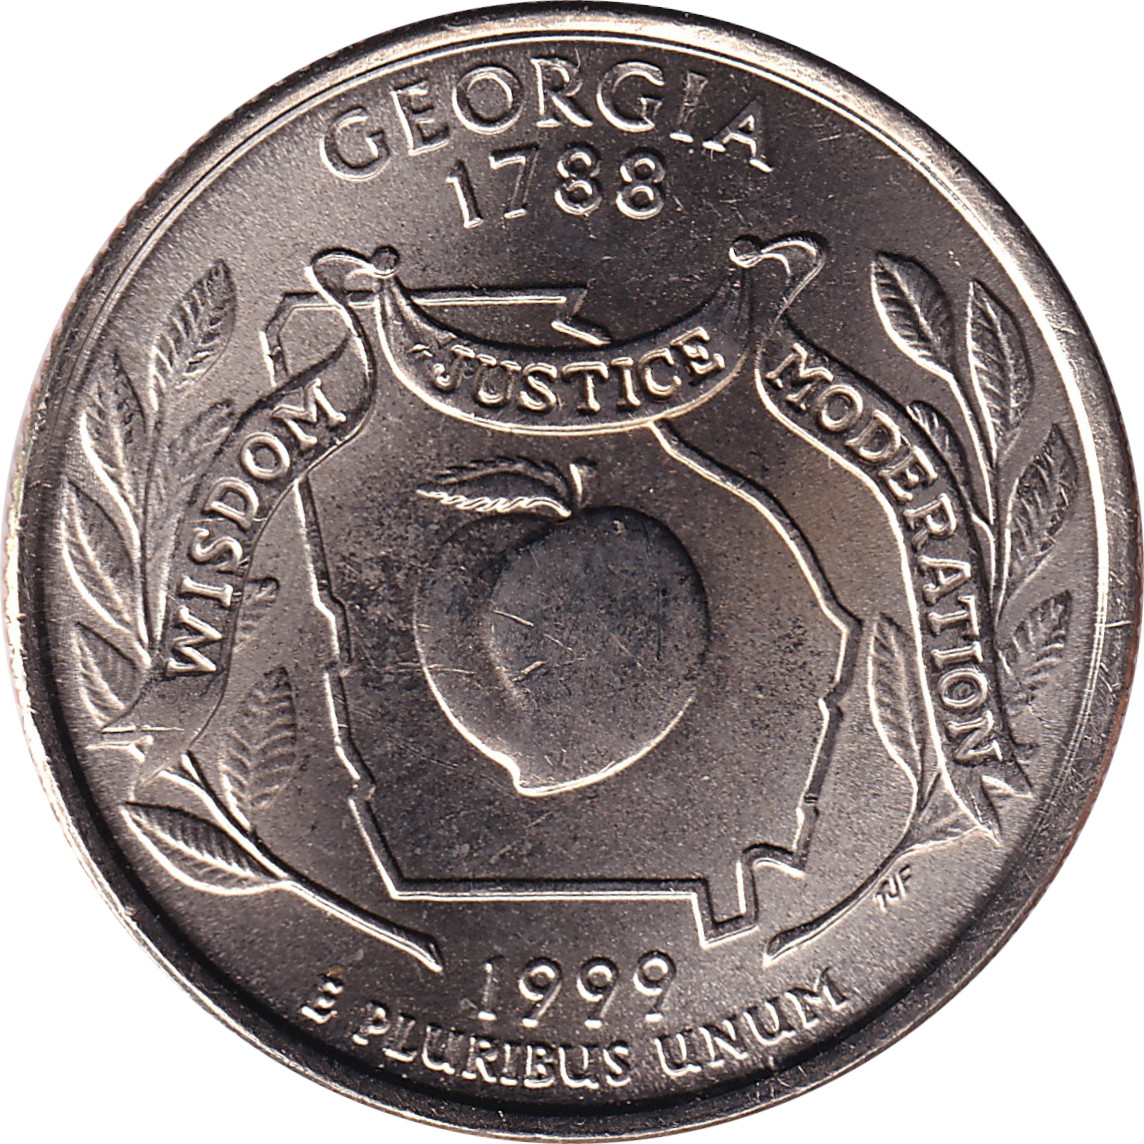 1/4 dollar - Georgia